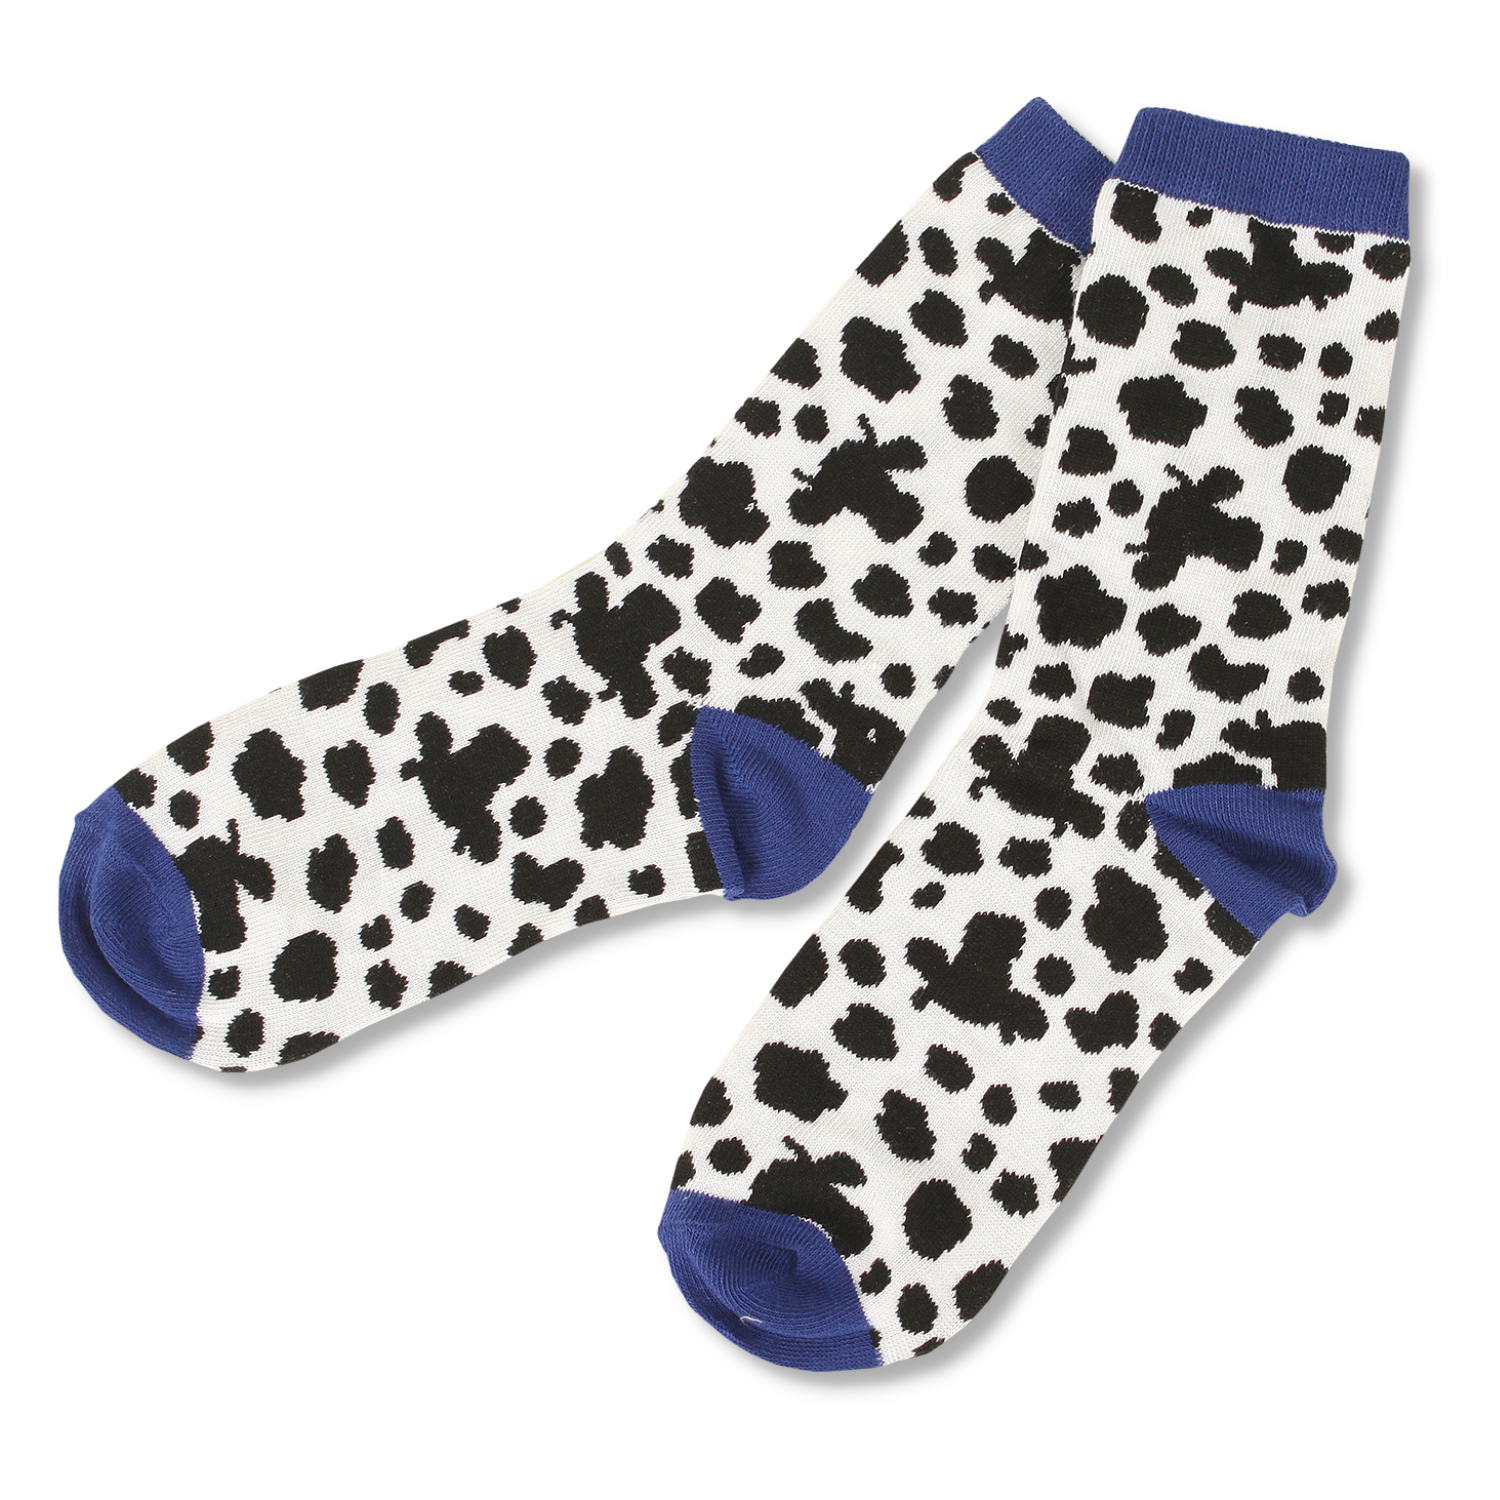 COWS Youth Socks - Spots